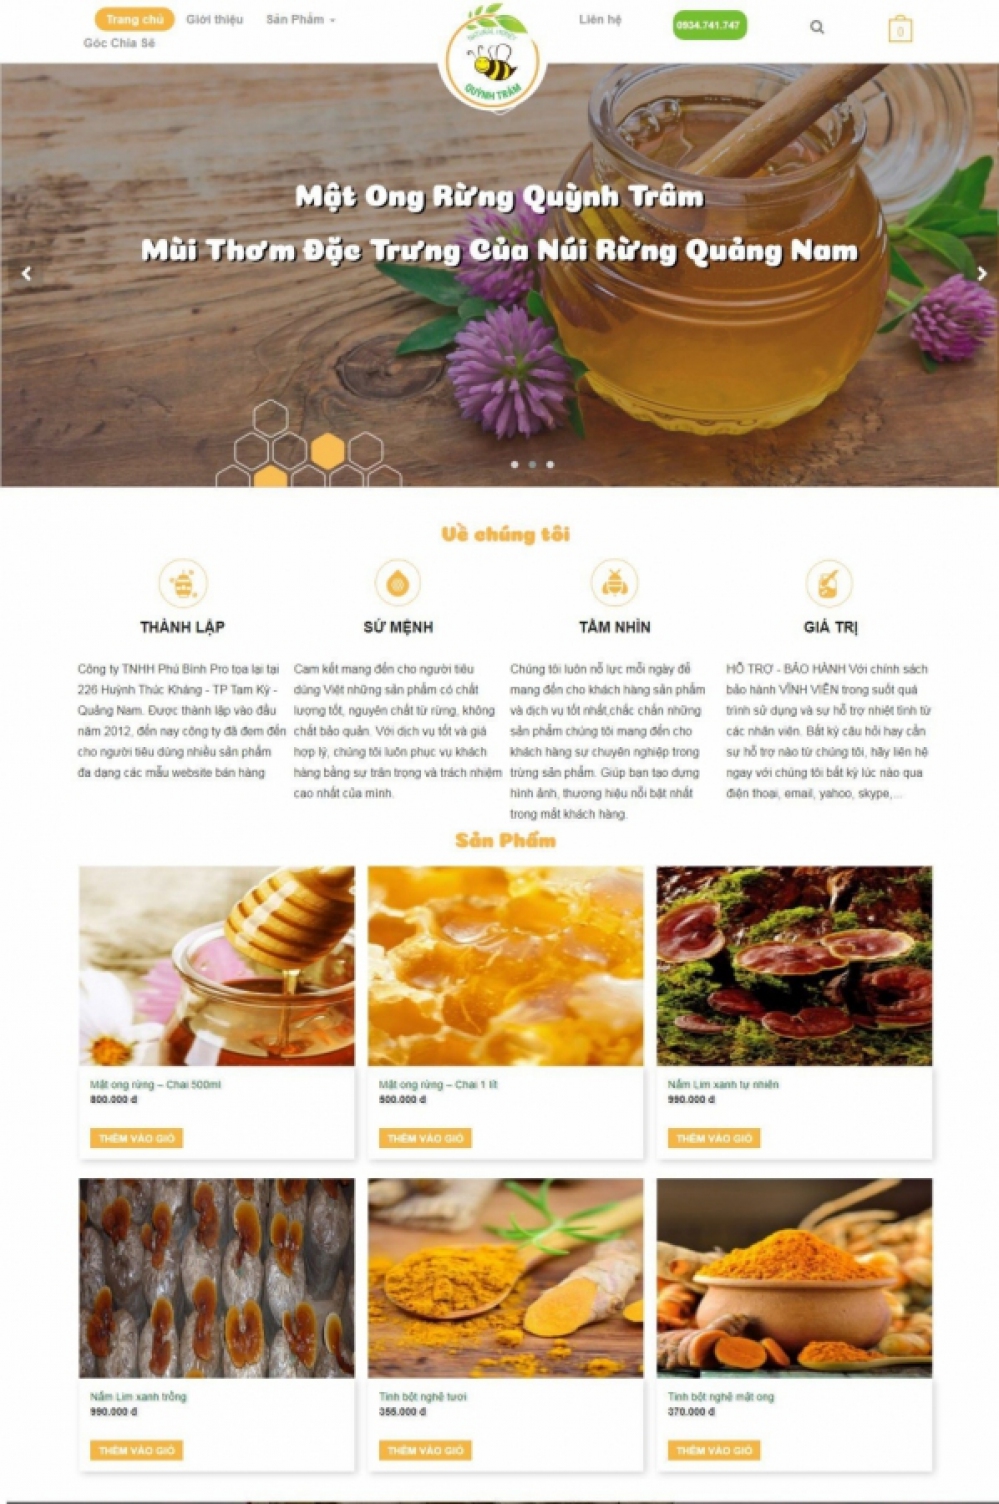 Giao diện website bán mật ong rừng